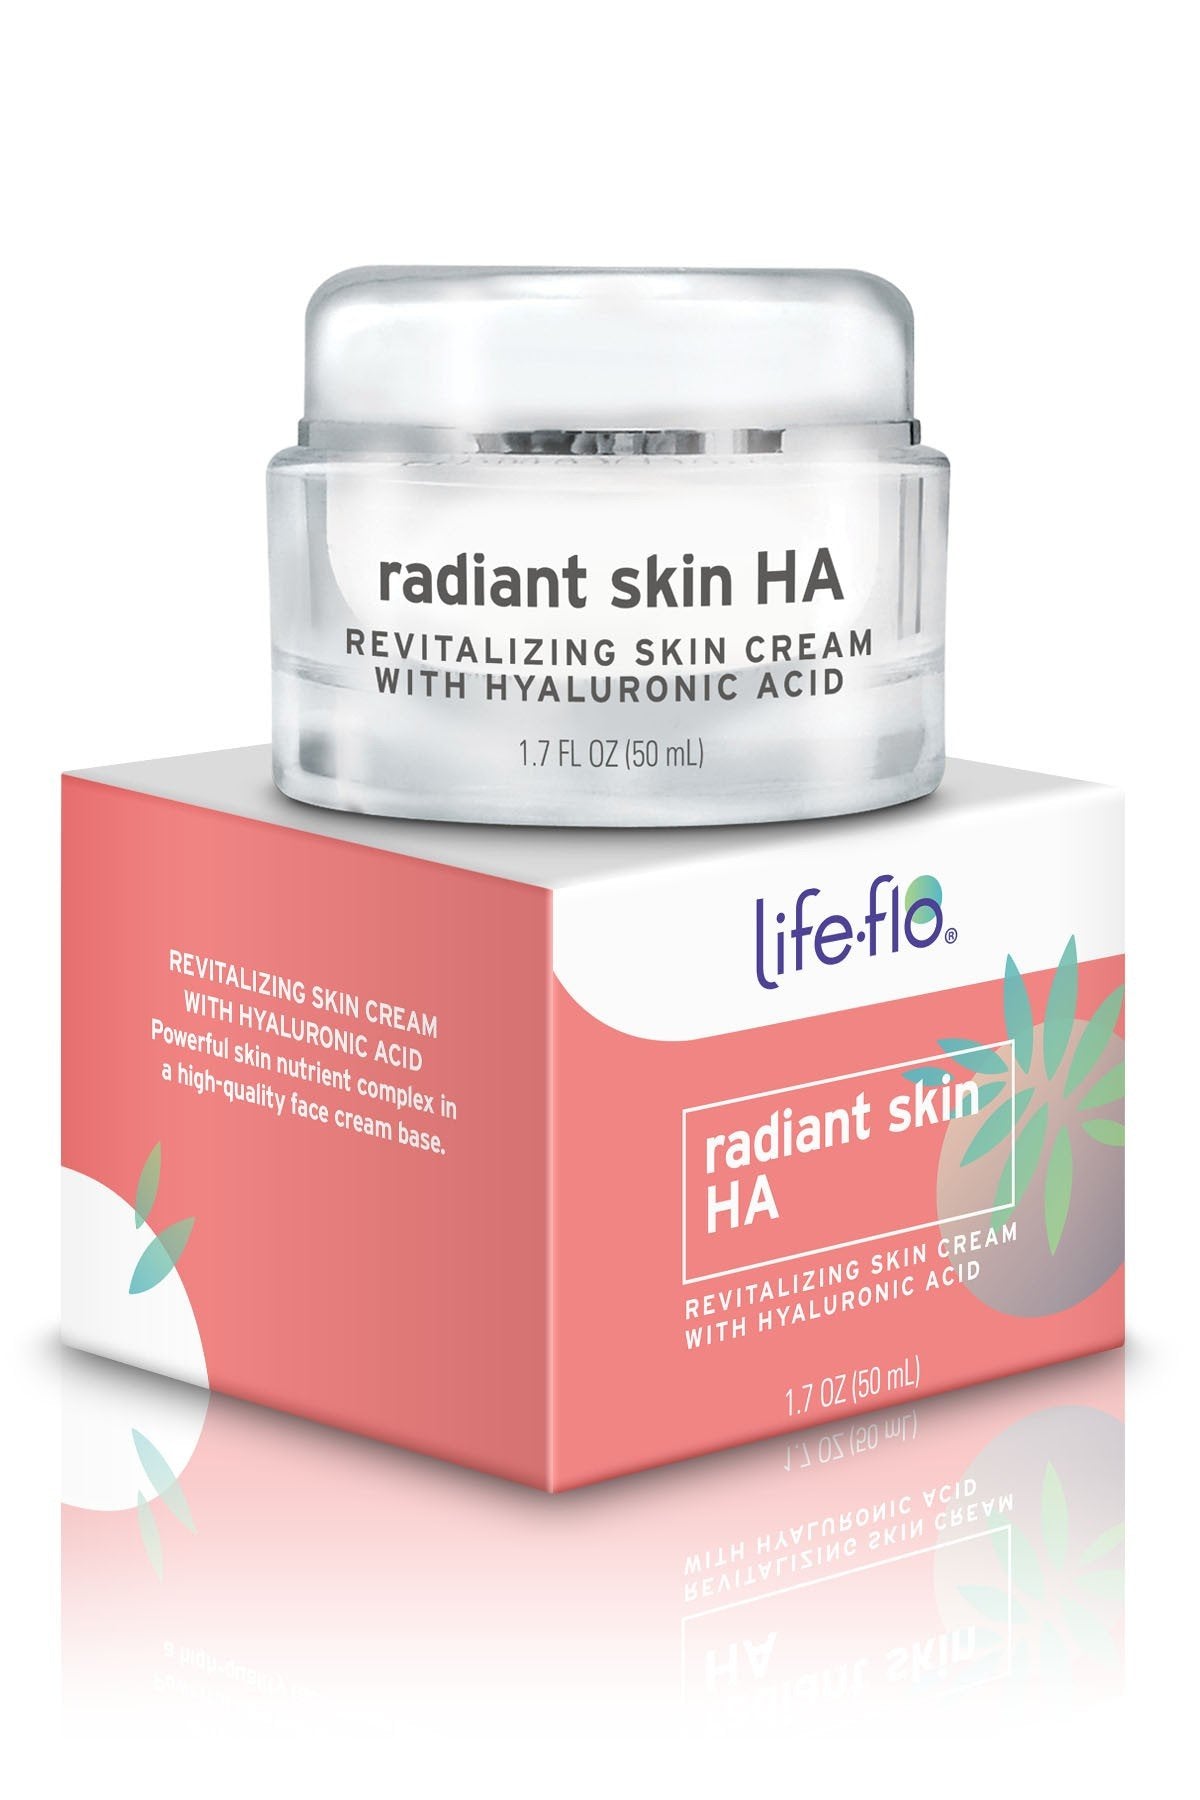 LifeFlo Radiant Skin 3 oz Liquid